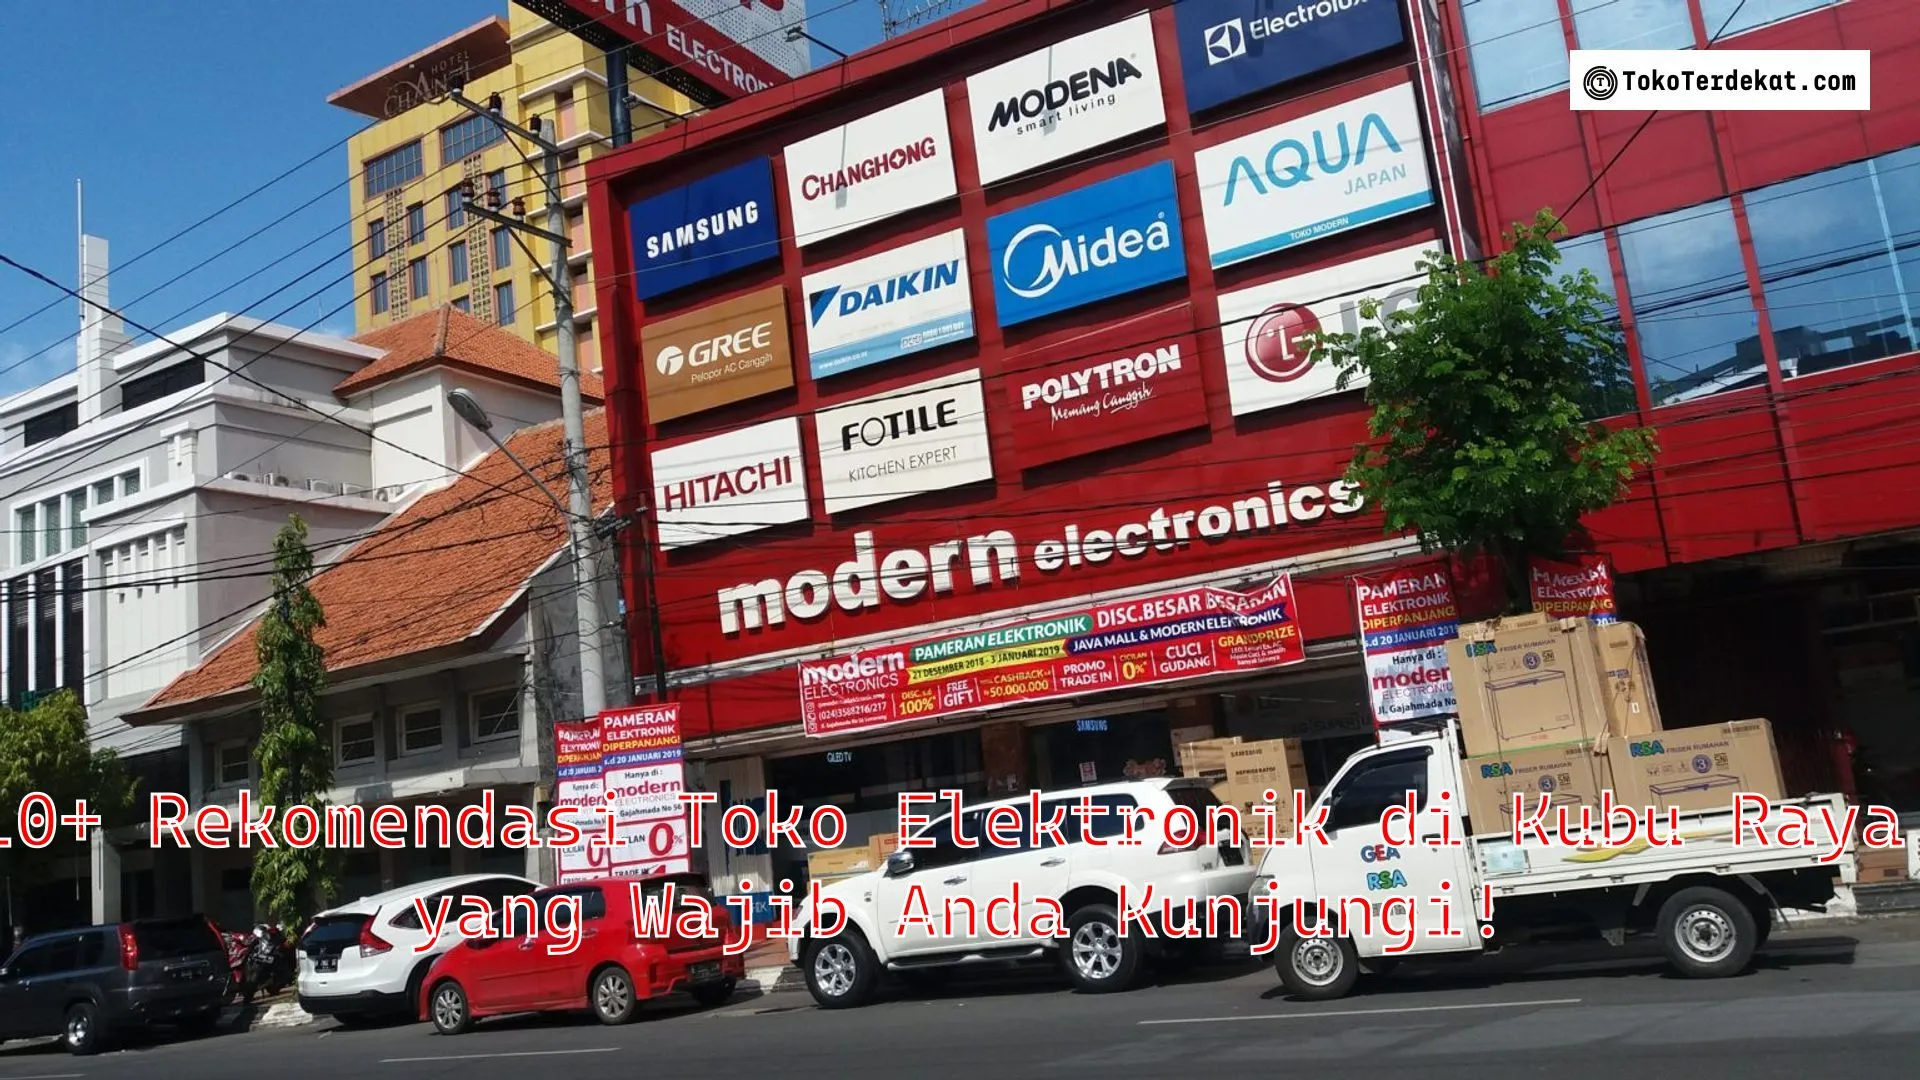 10+ Rekomendasi Toko Elektronik di Kubu Raya yang Wajib Anda Kunjungi!